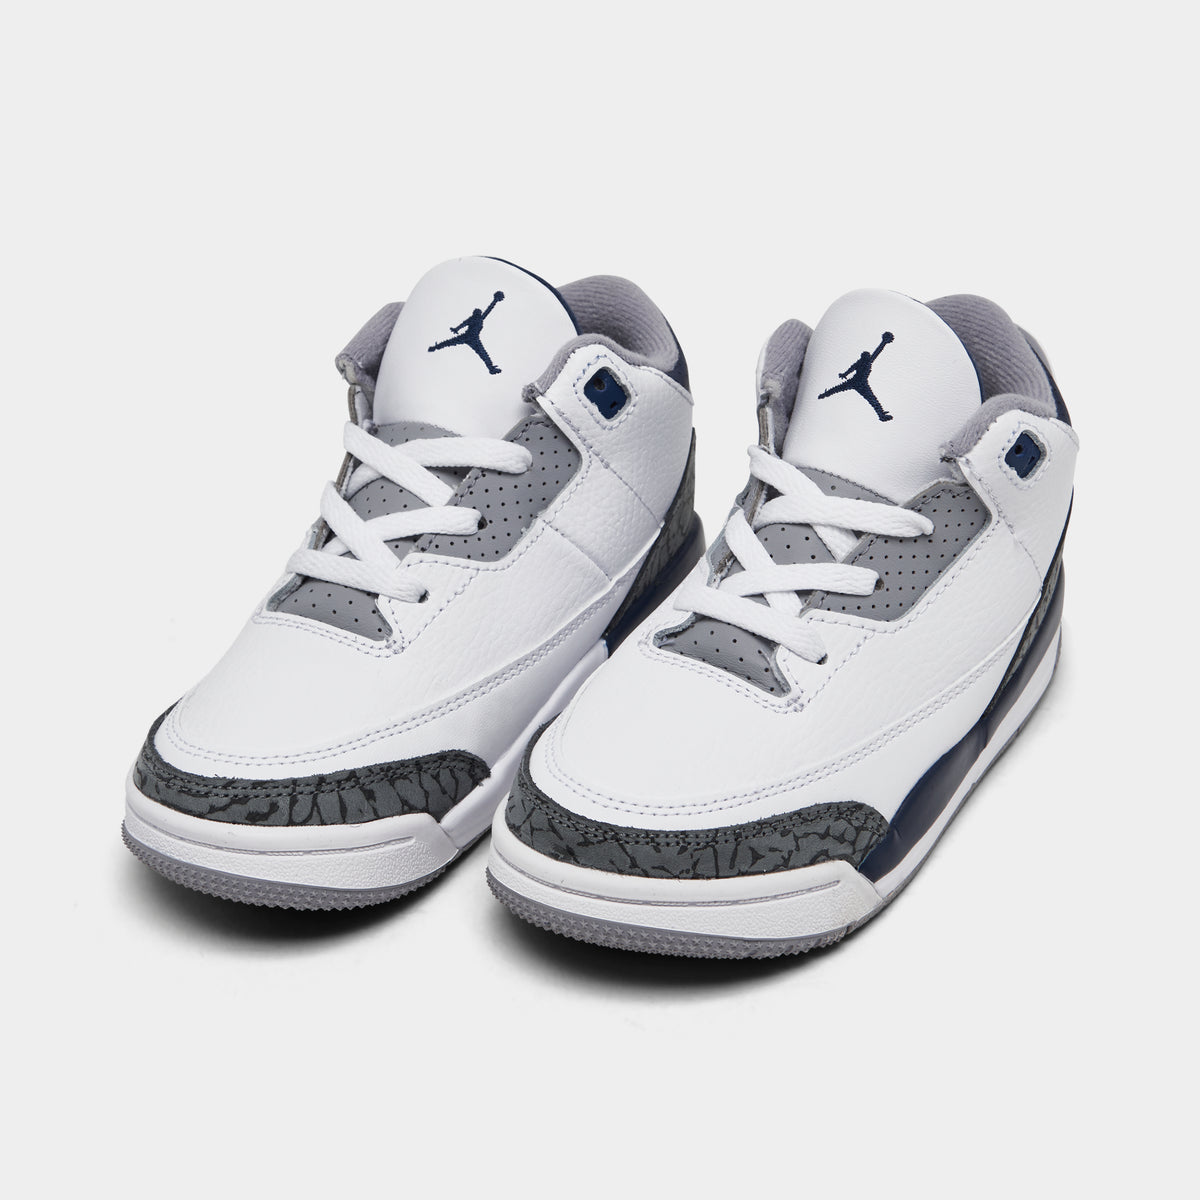 Jordan 3 Retro TD White / Midnight Navy - Cement Grey